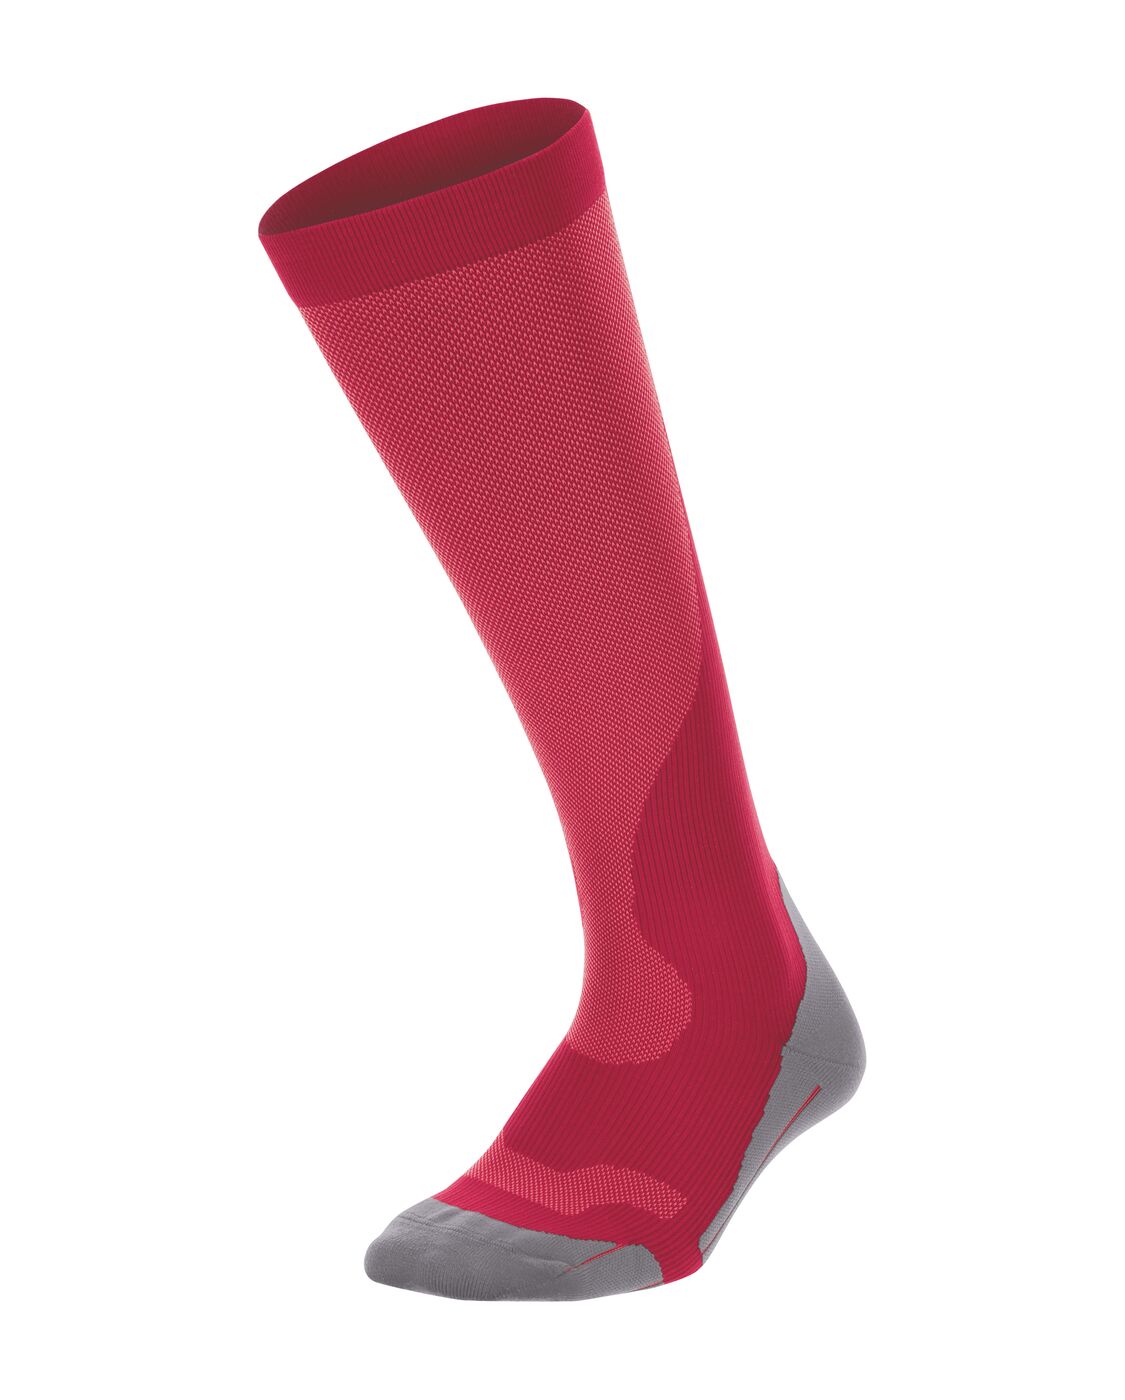 Perf Run Knee Length Compression Socks, Hot Pink/Grey